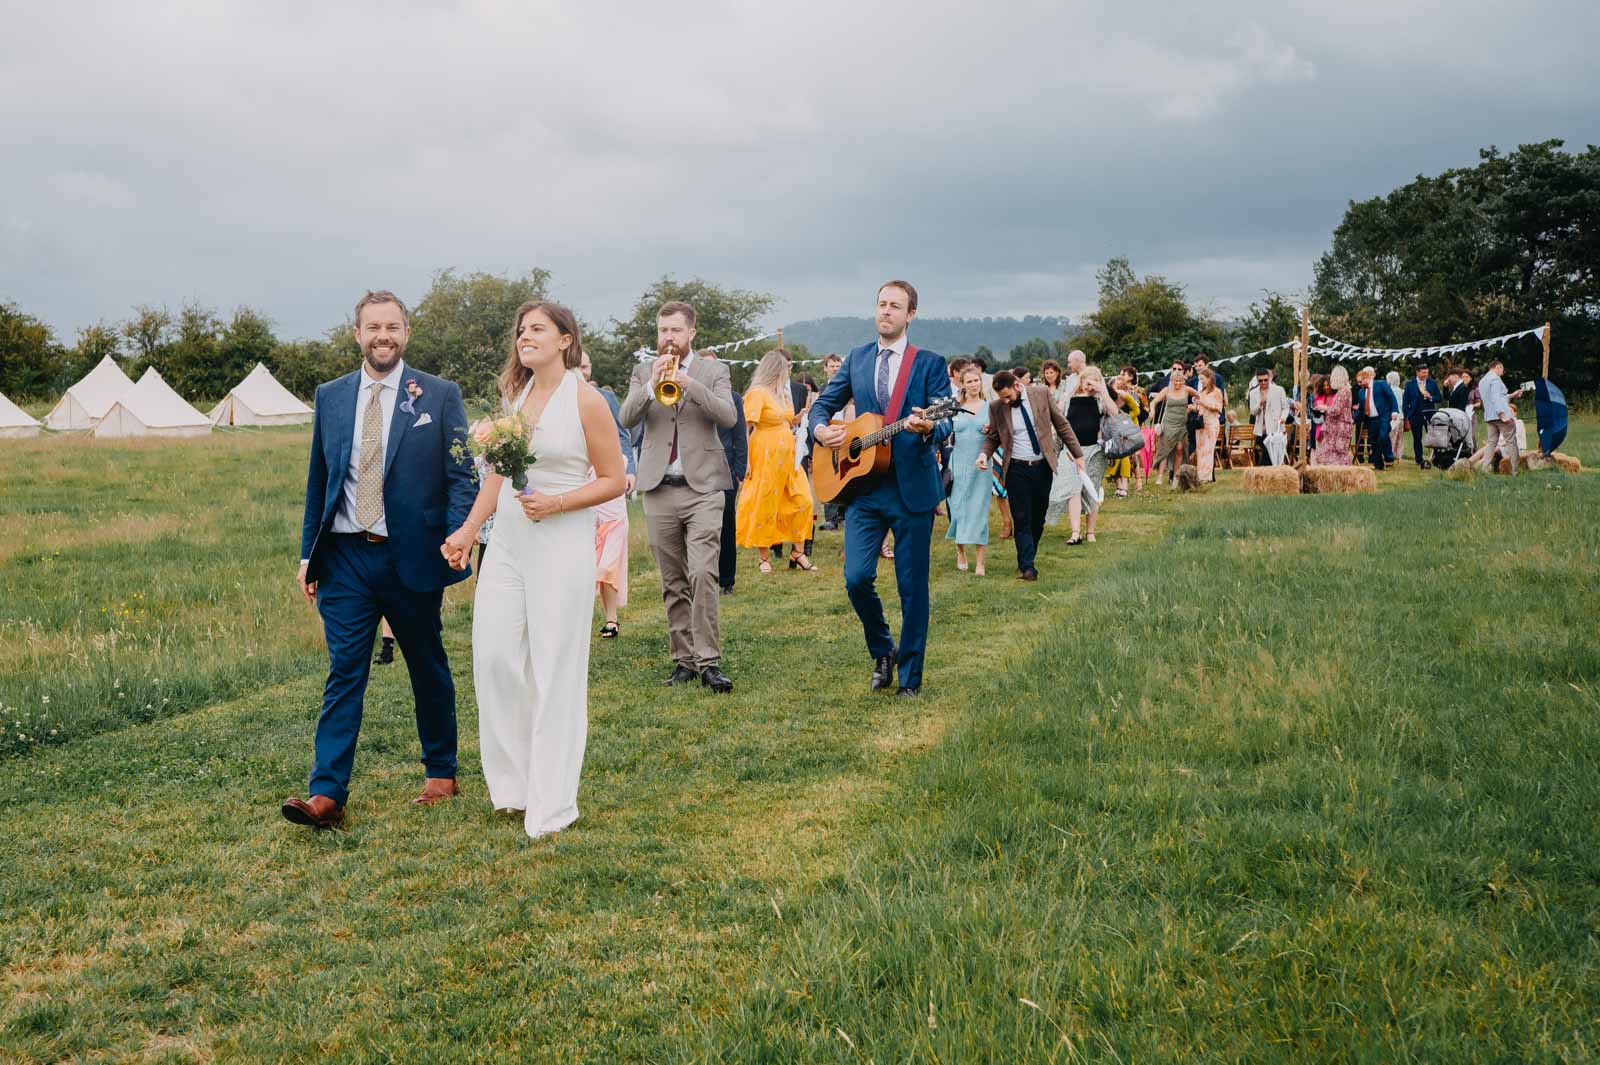 Festival style wedding in Glastonbury